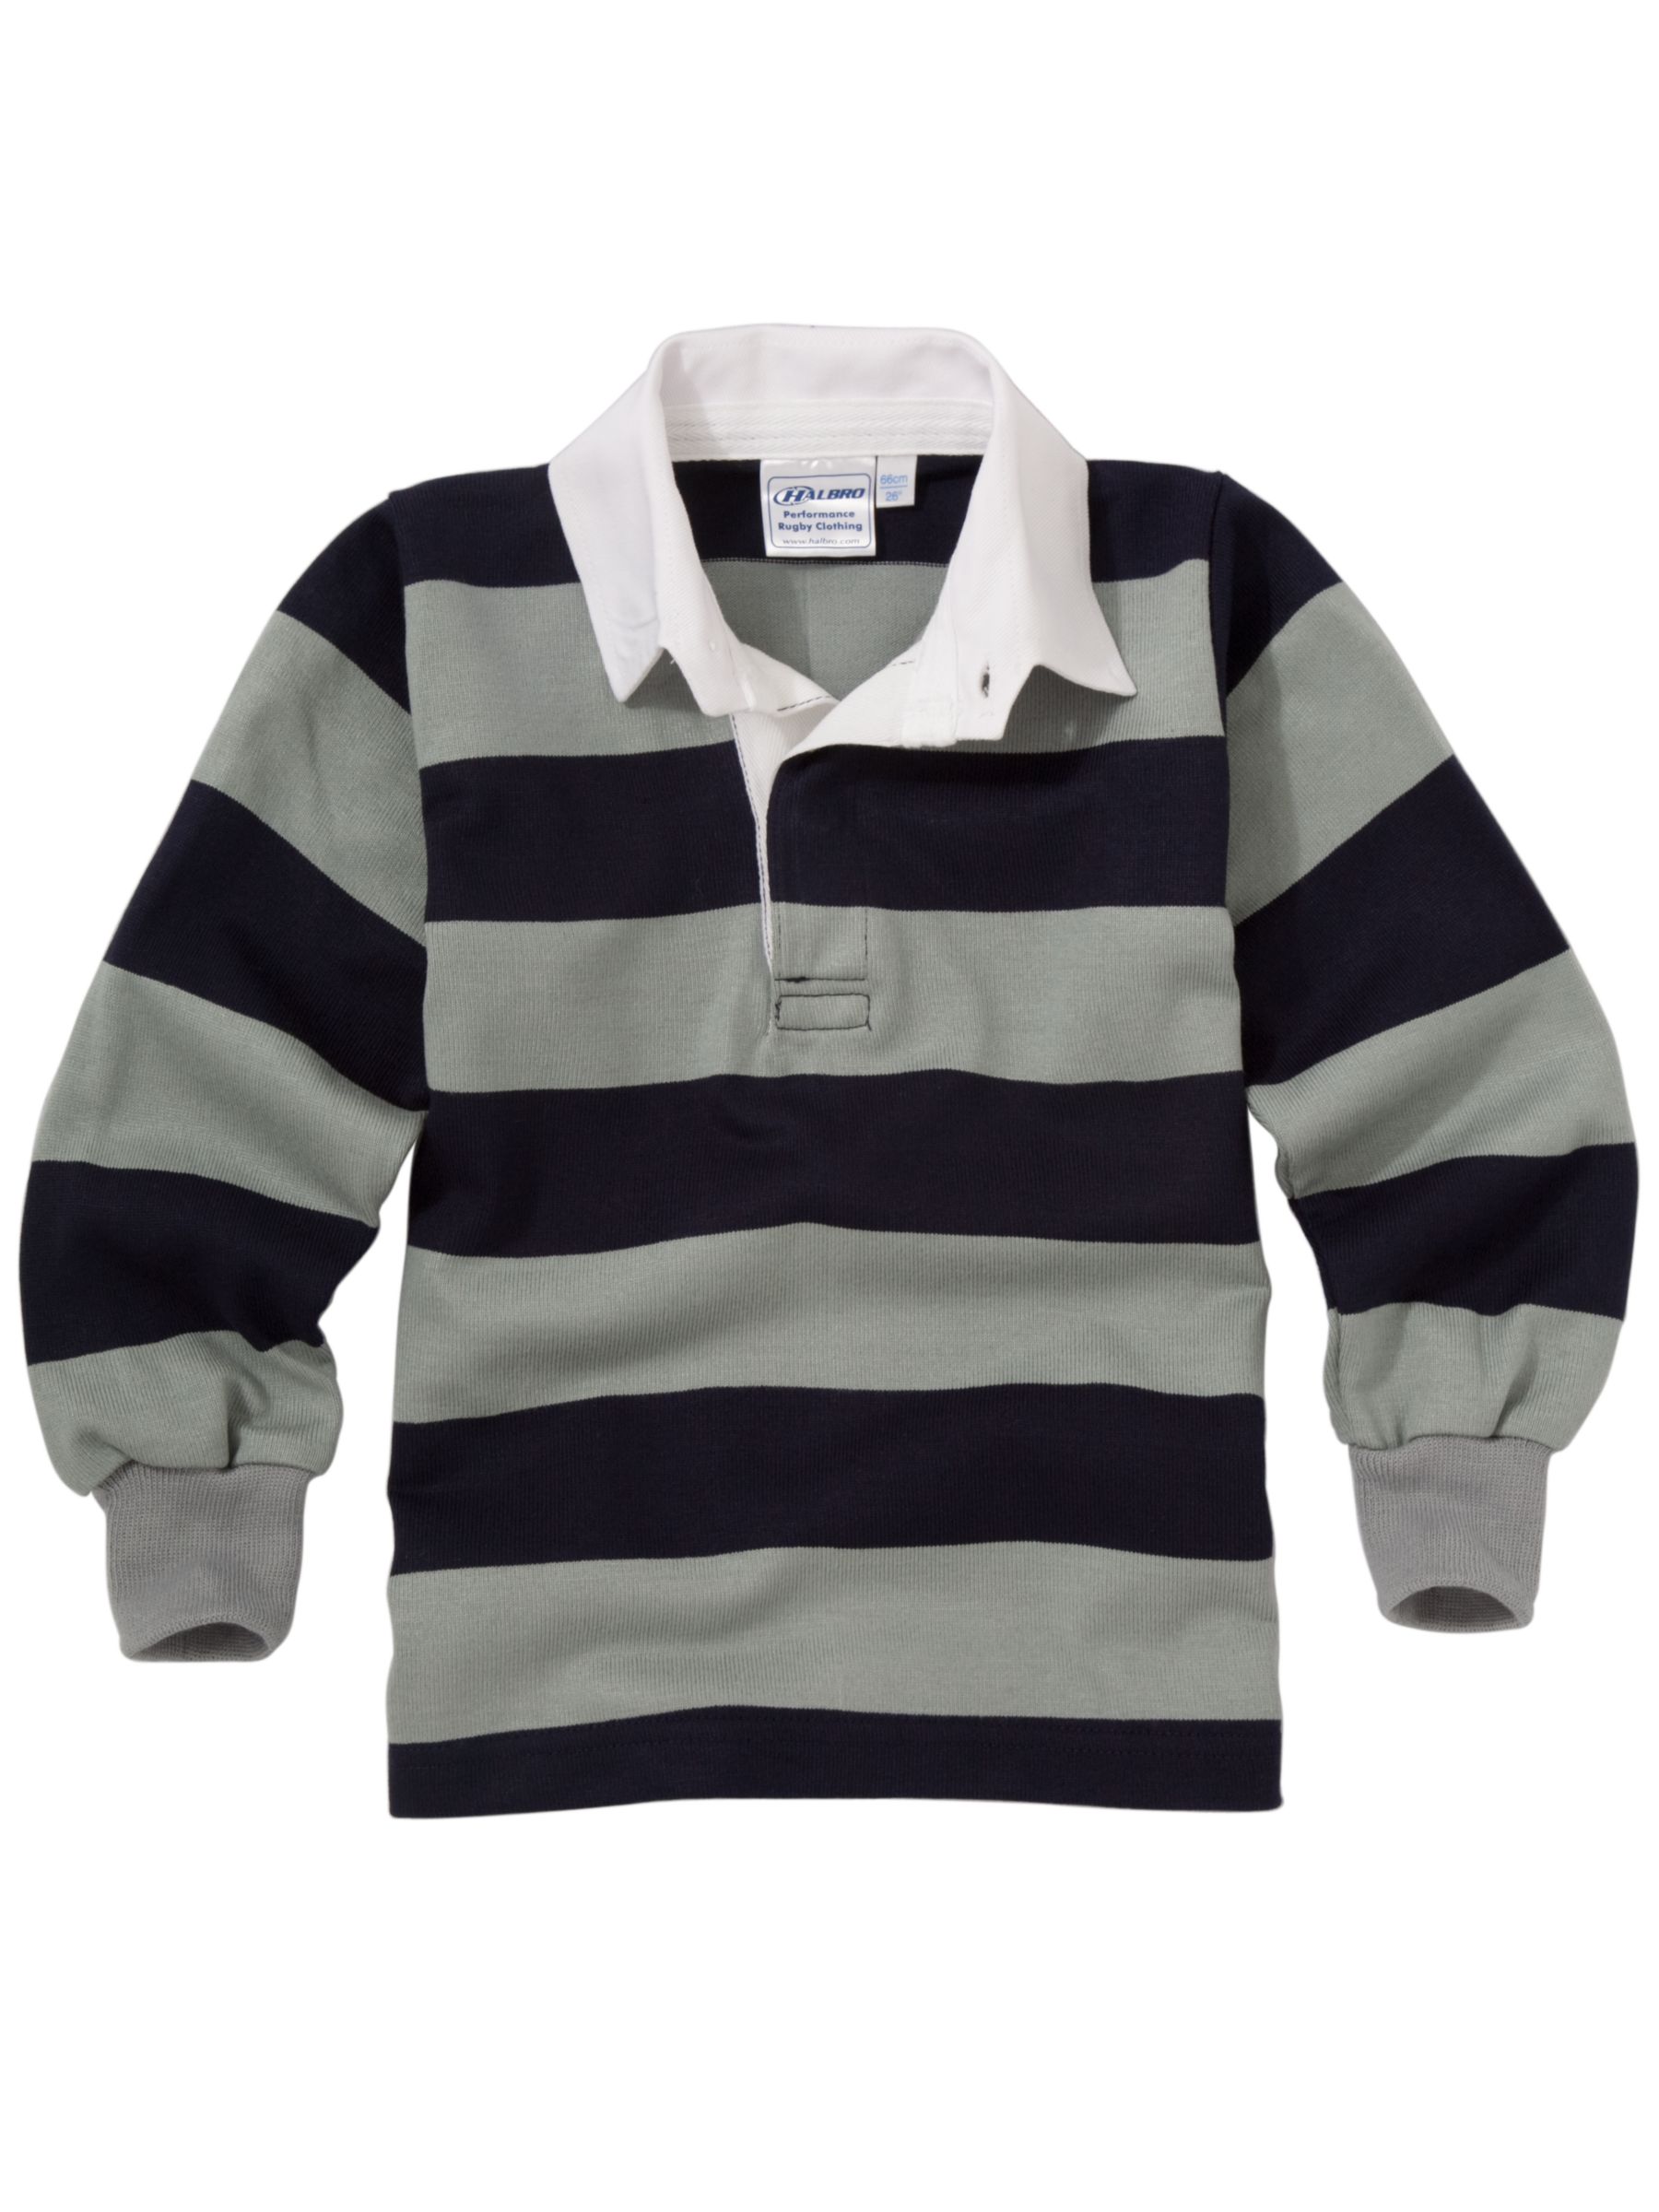 Other Schools School Unisex Sports Rugby Shirt, Navy/grey